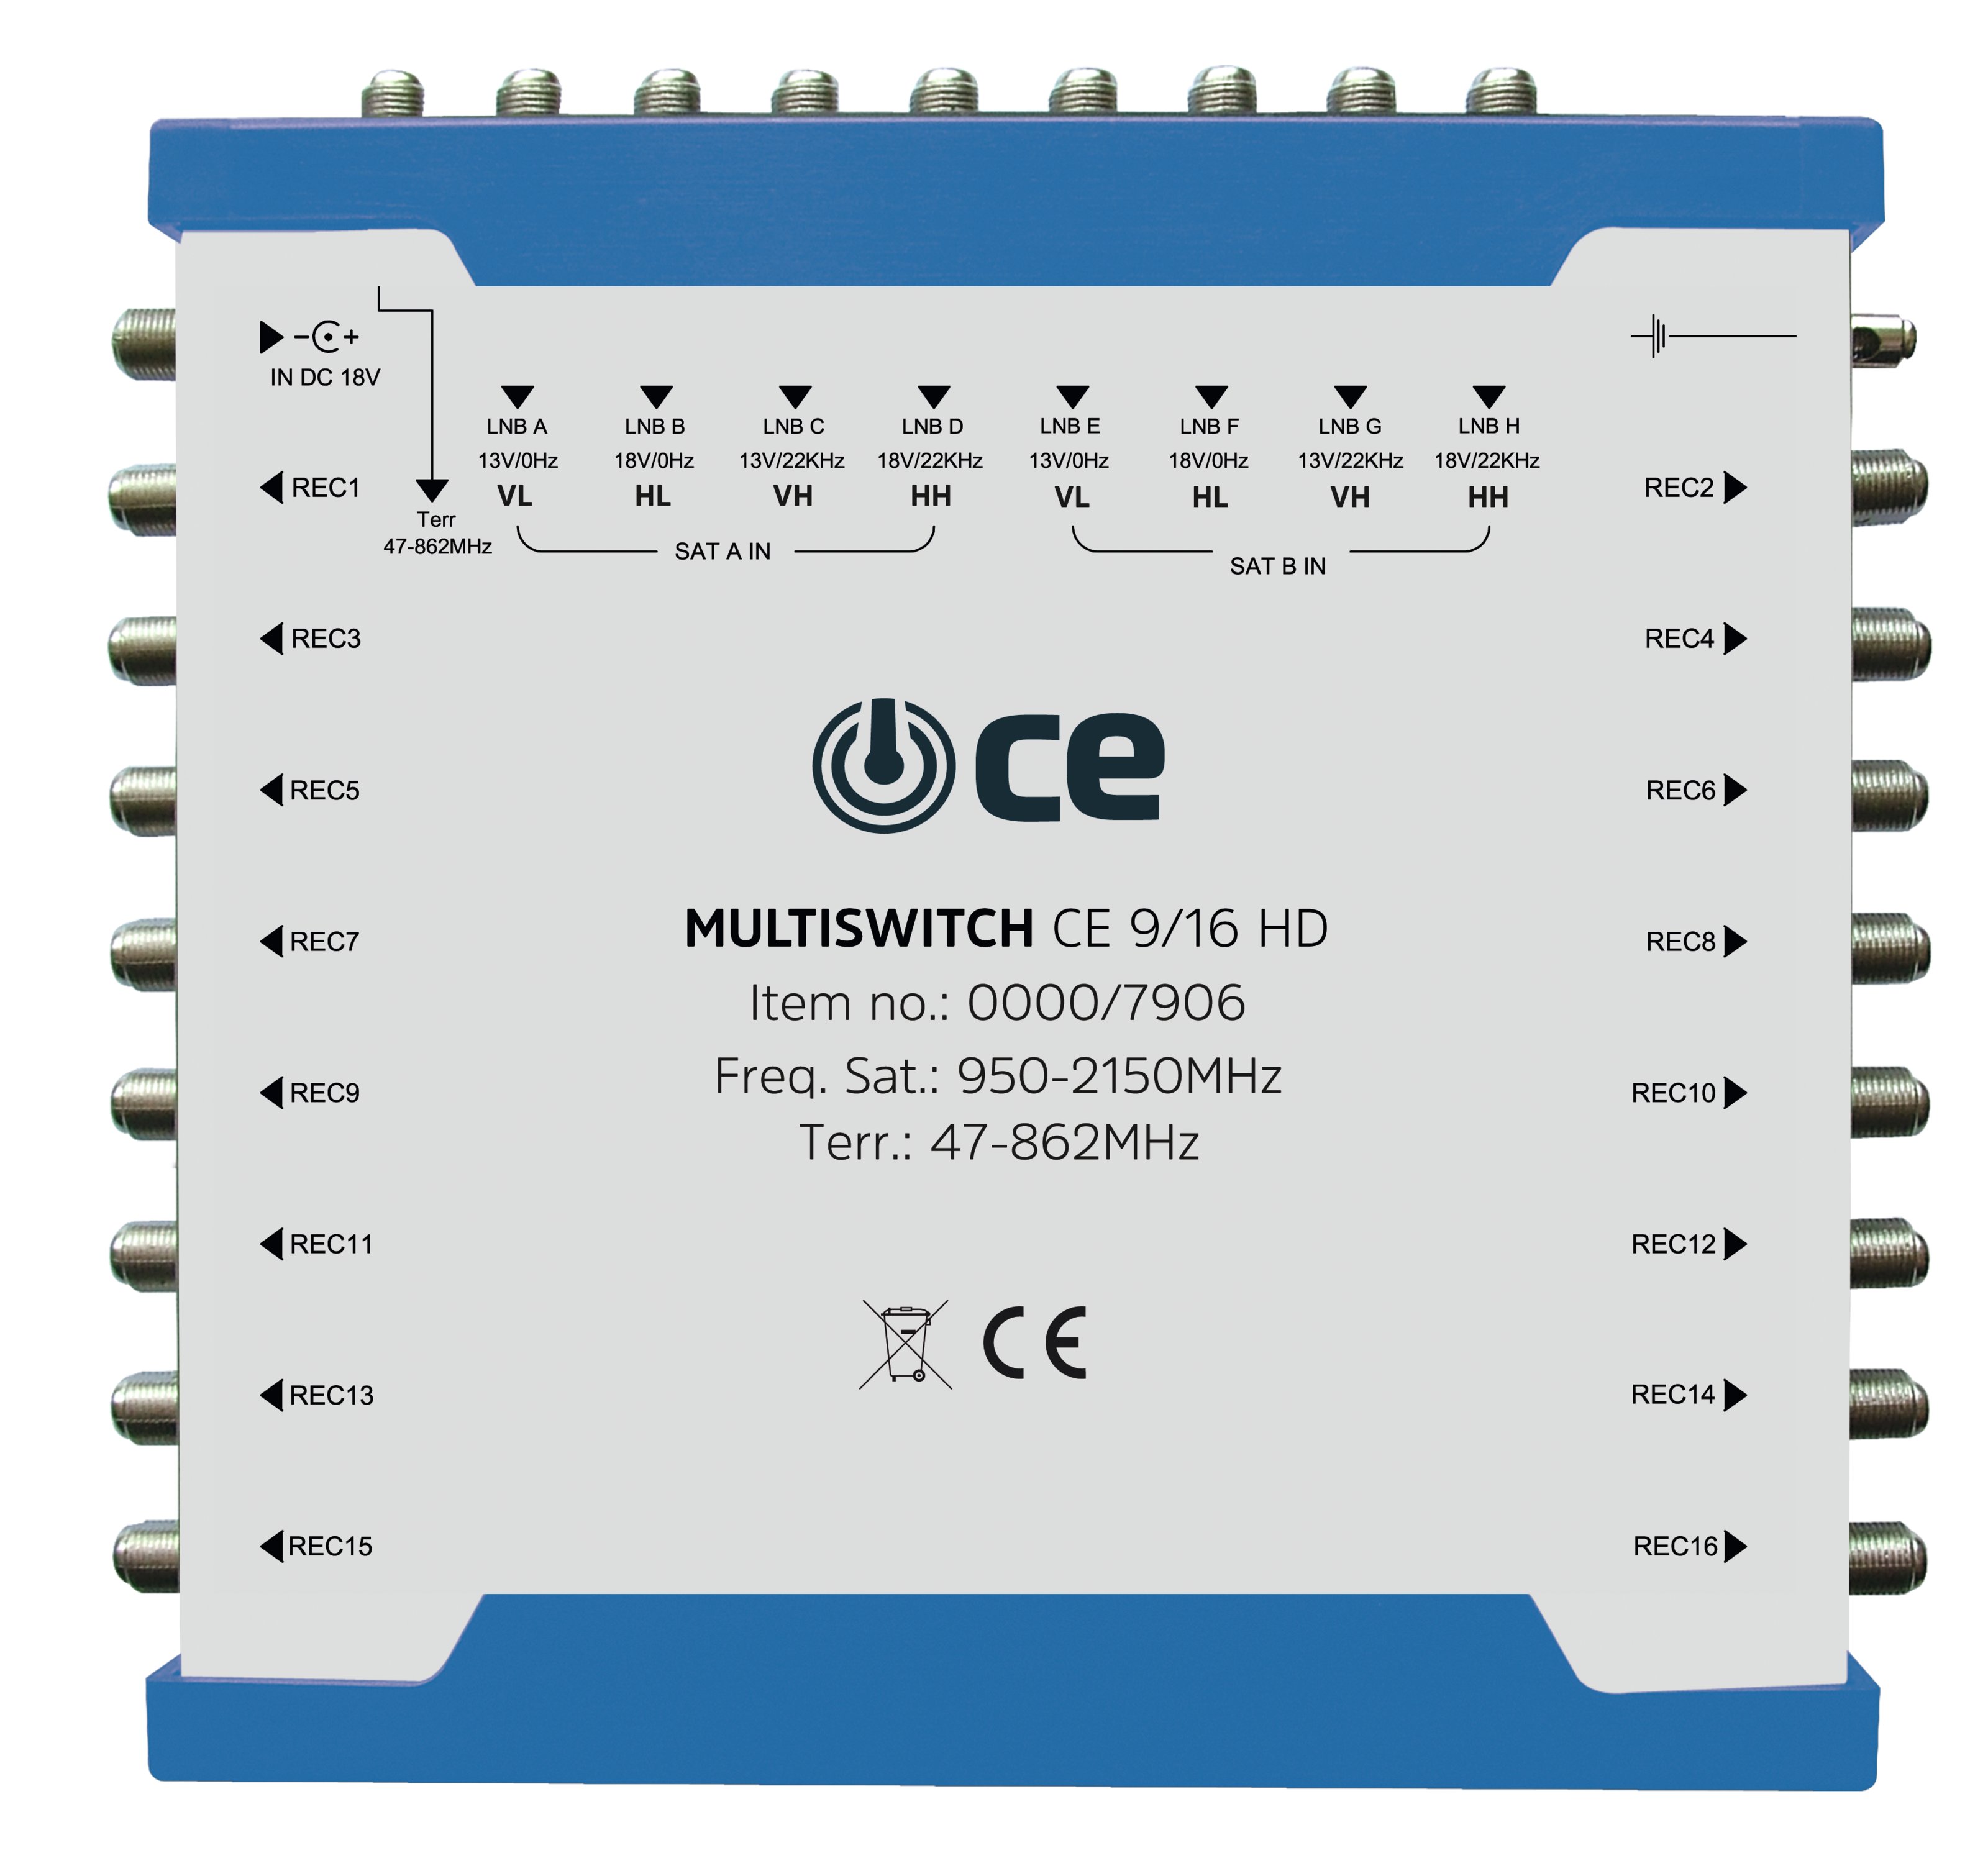 Multiswitch CE 9/16 HD